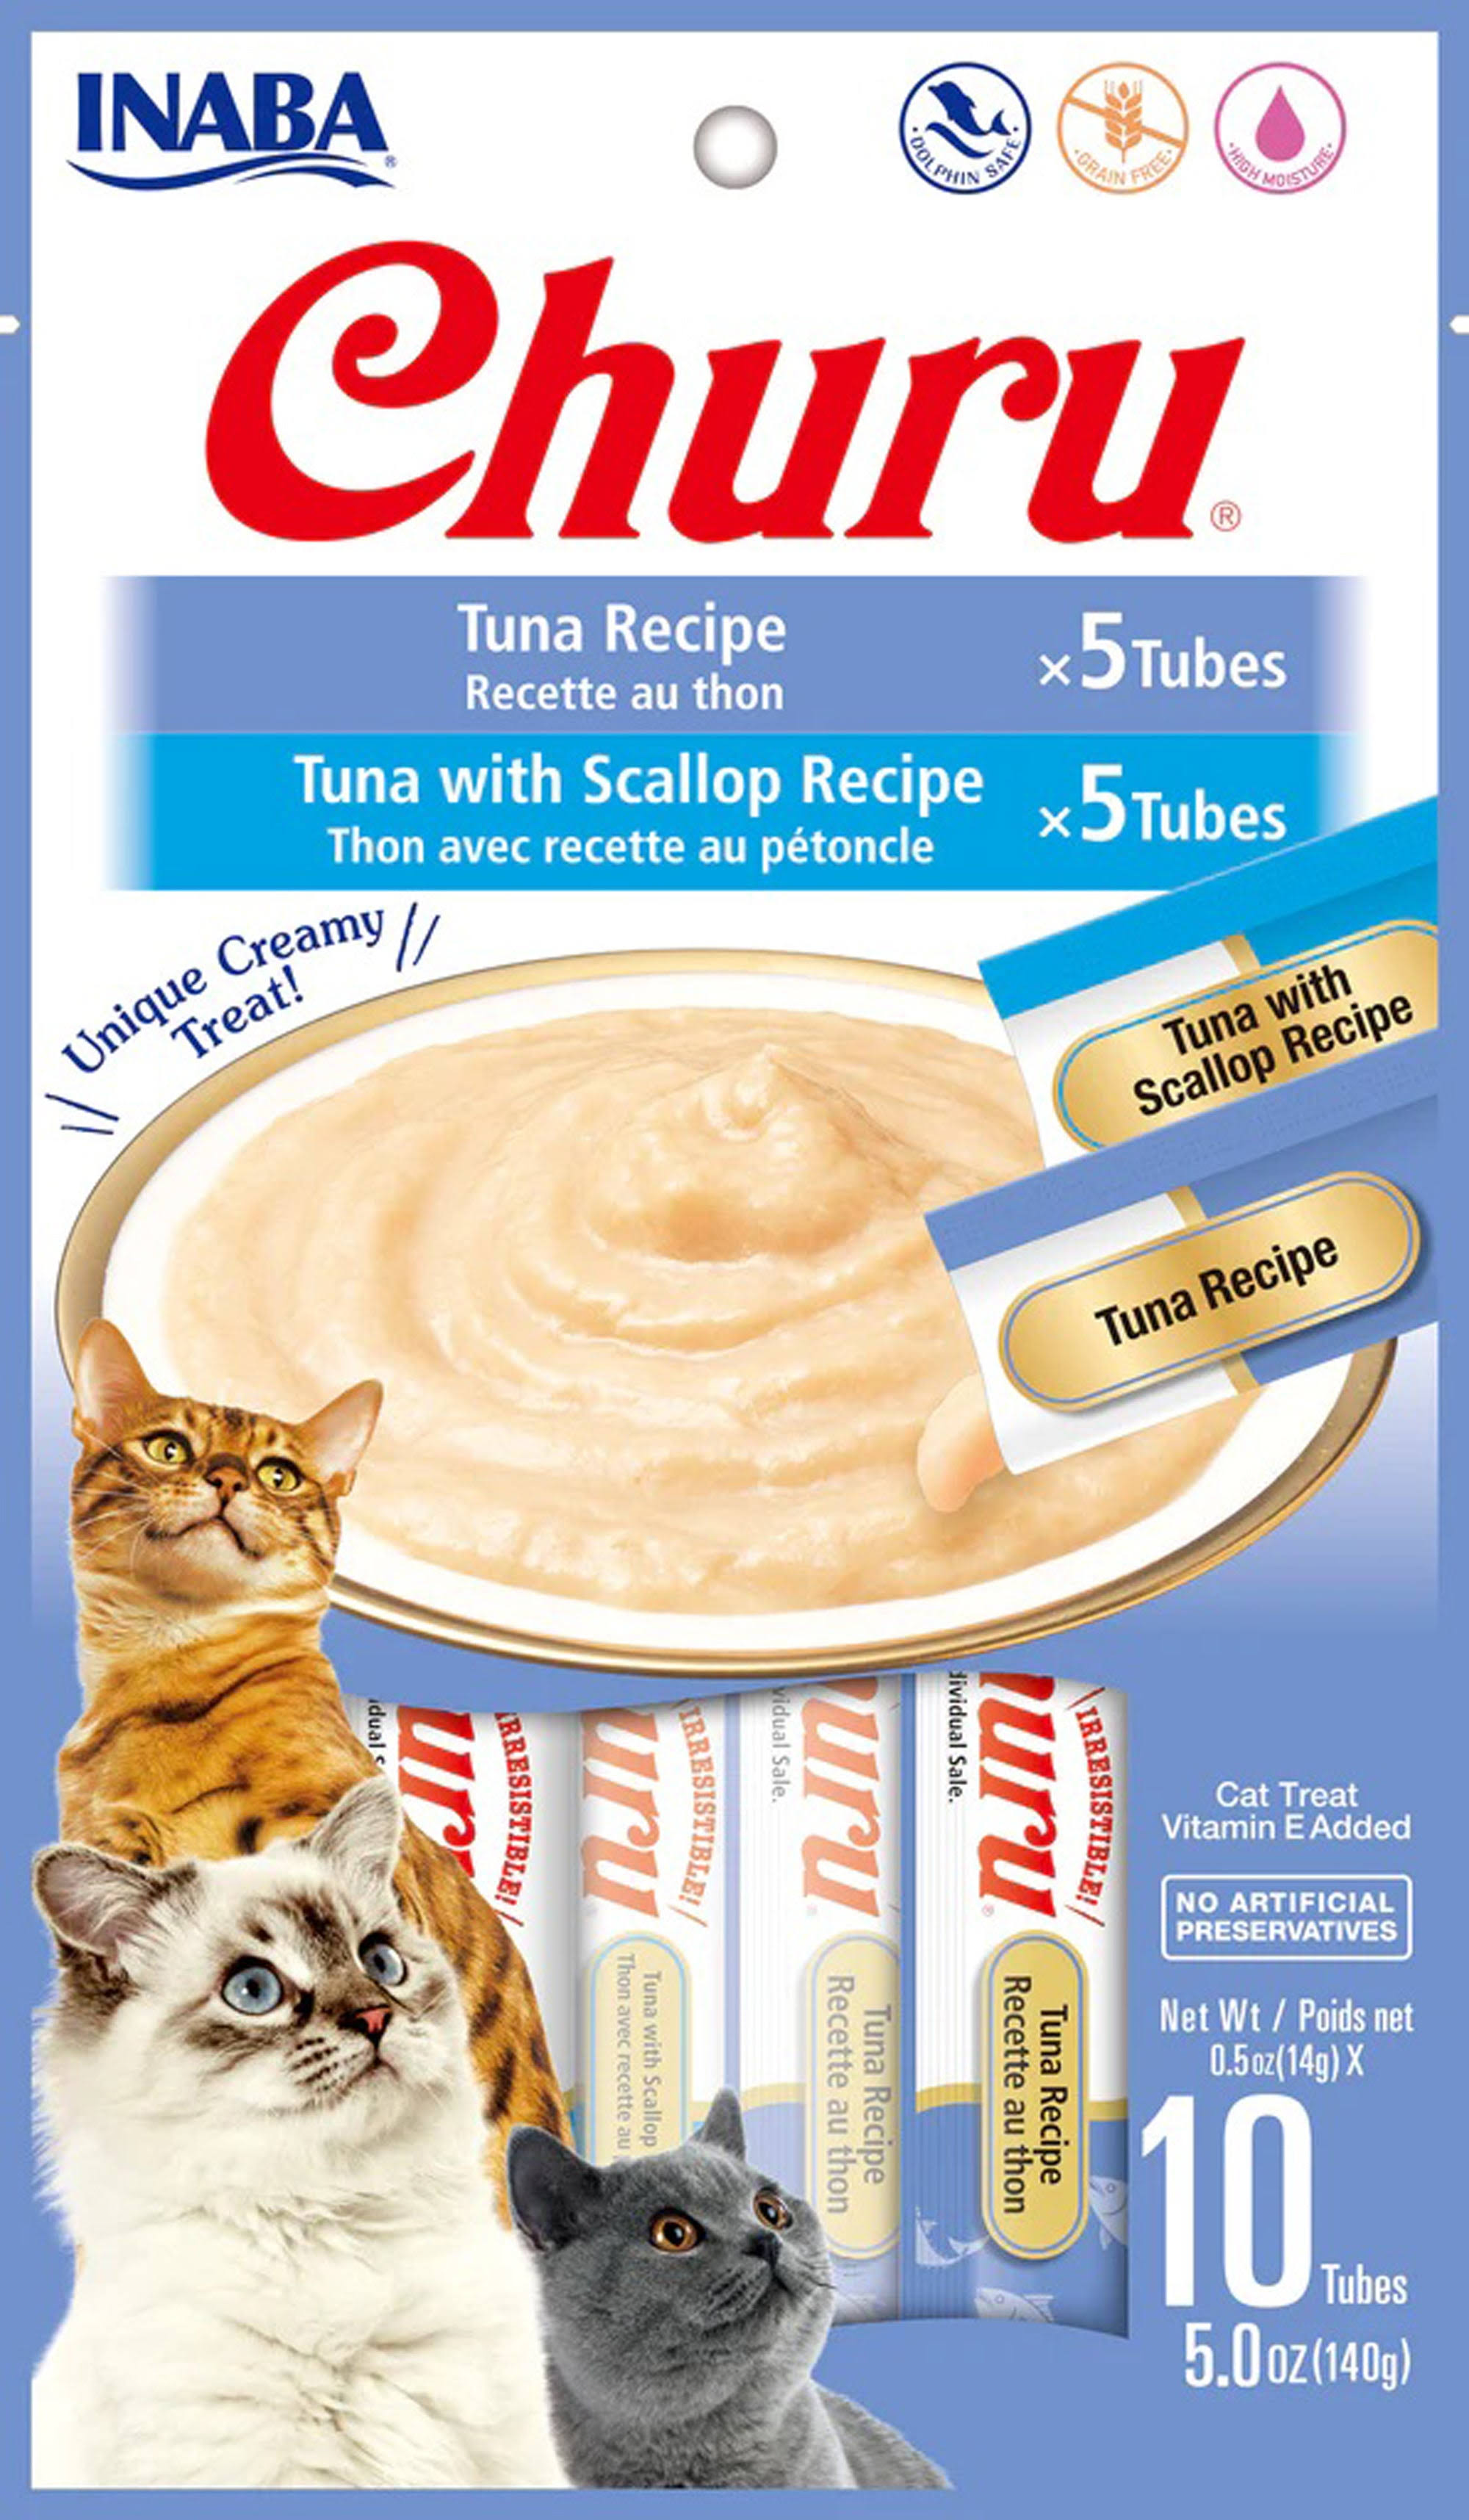 Inaba Churu Tuna & Tuna with Scallop Recipe Variety Creamy Cat Treat 10 PK